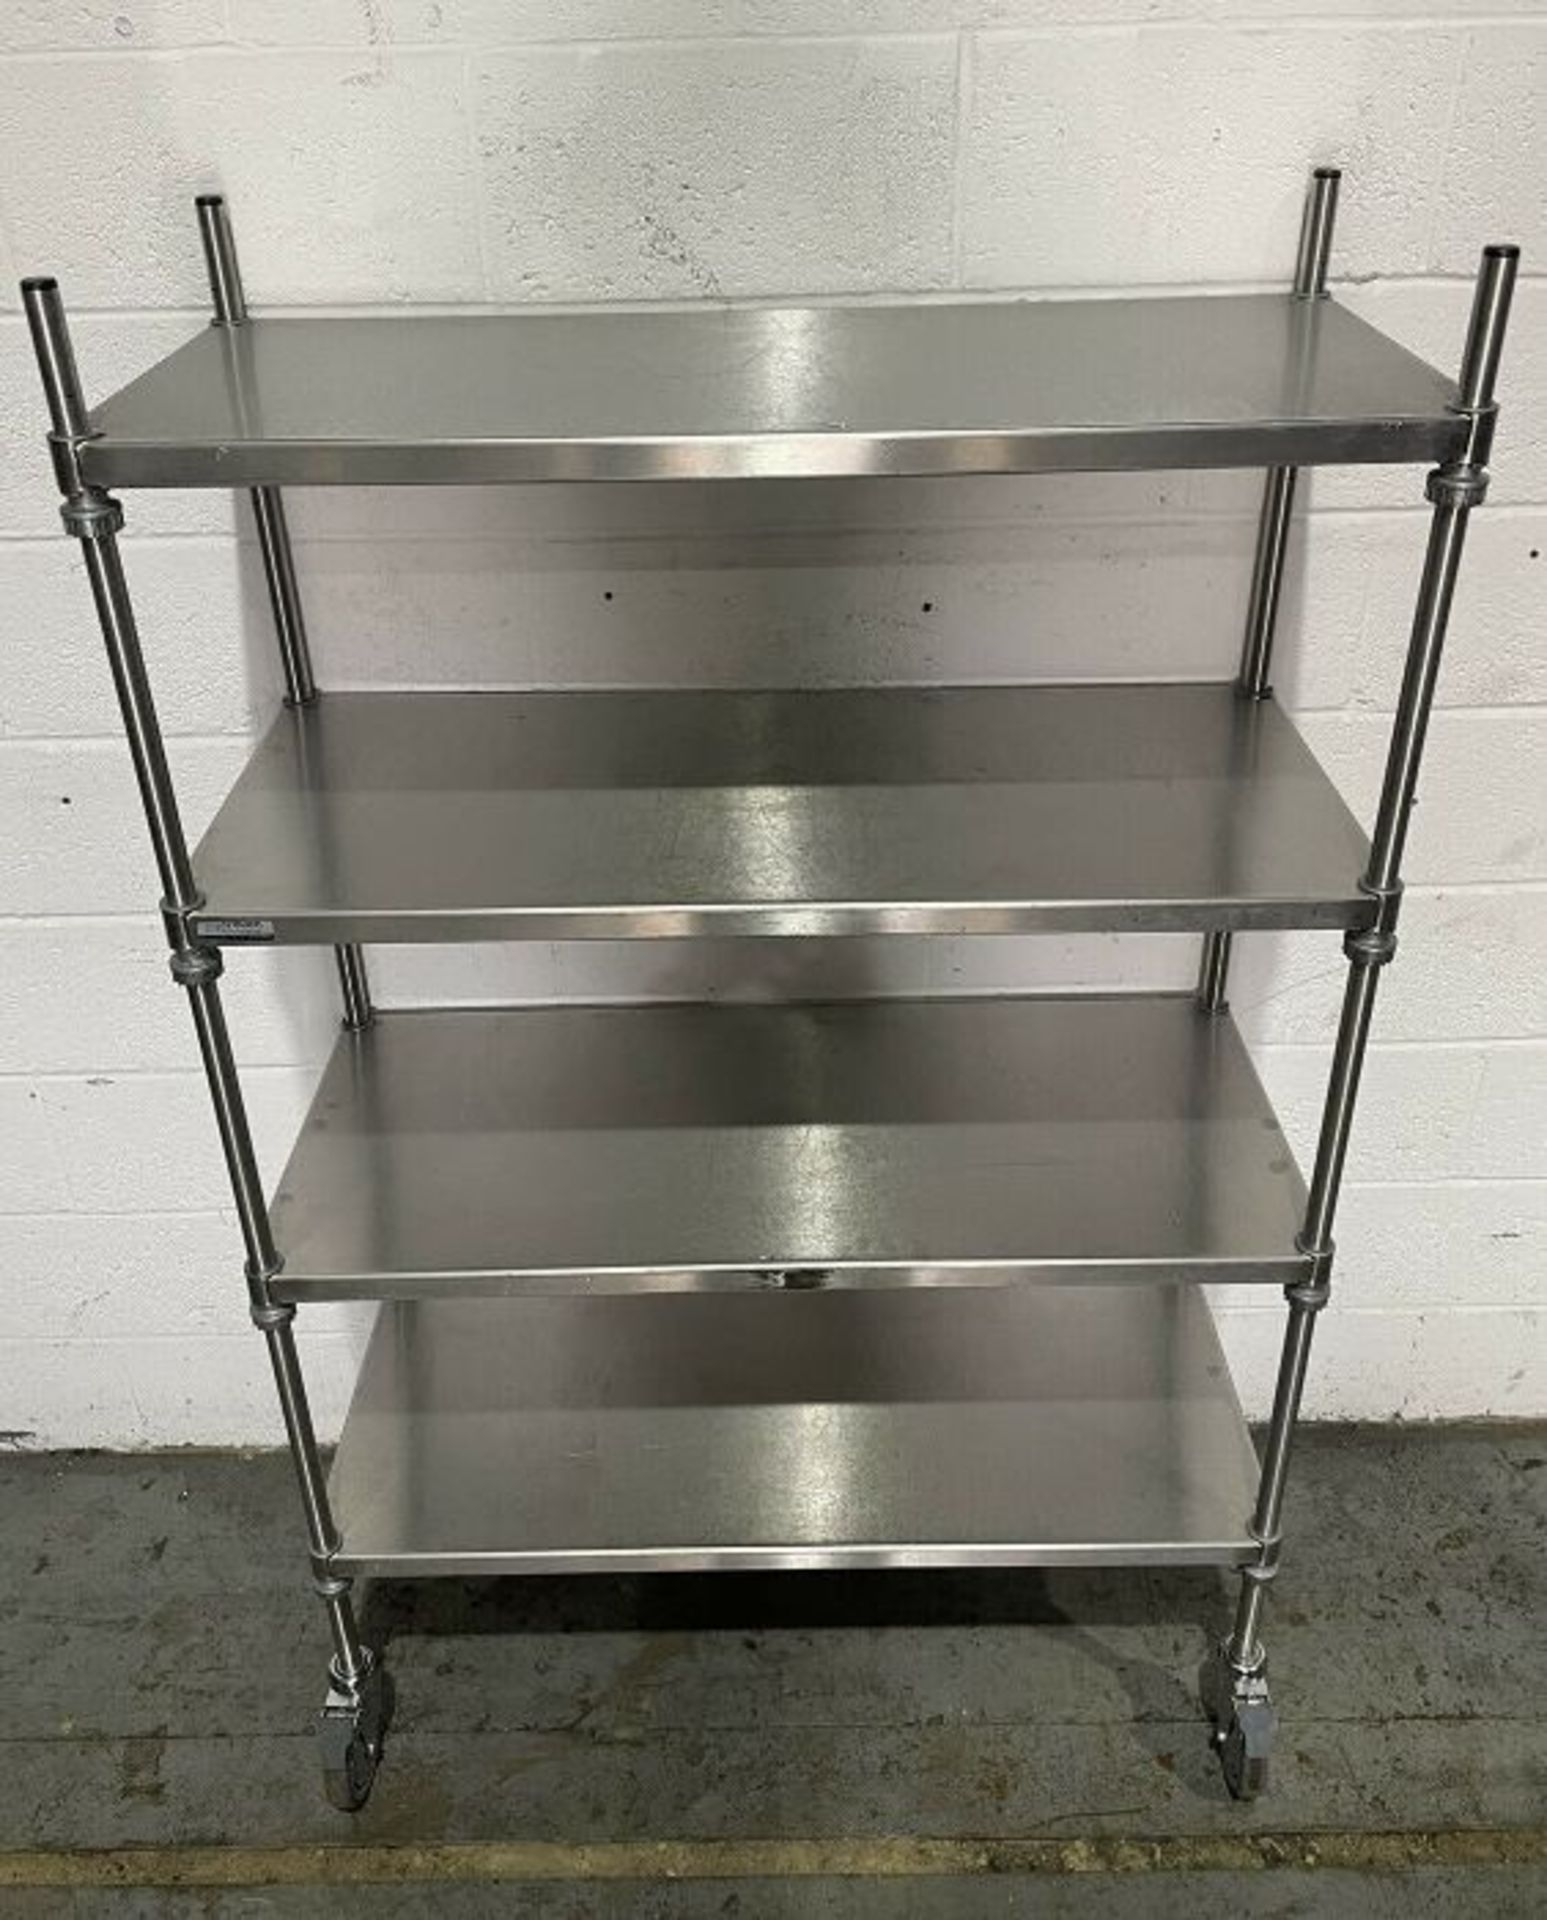 Craven Firmashelf Stainless Steel Shelf - Image 2 of 4